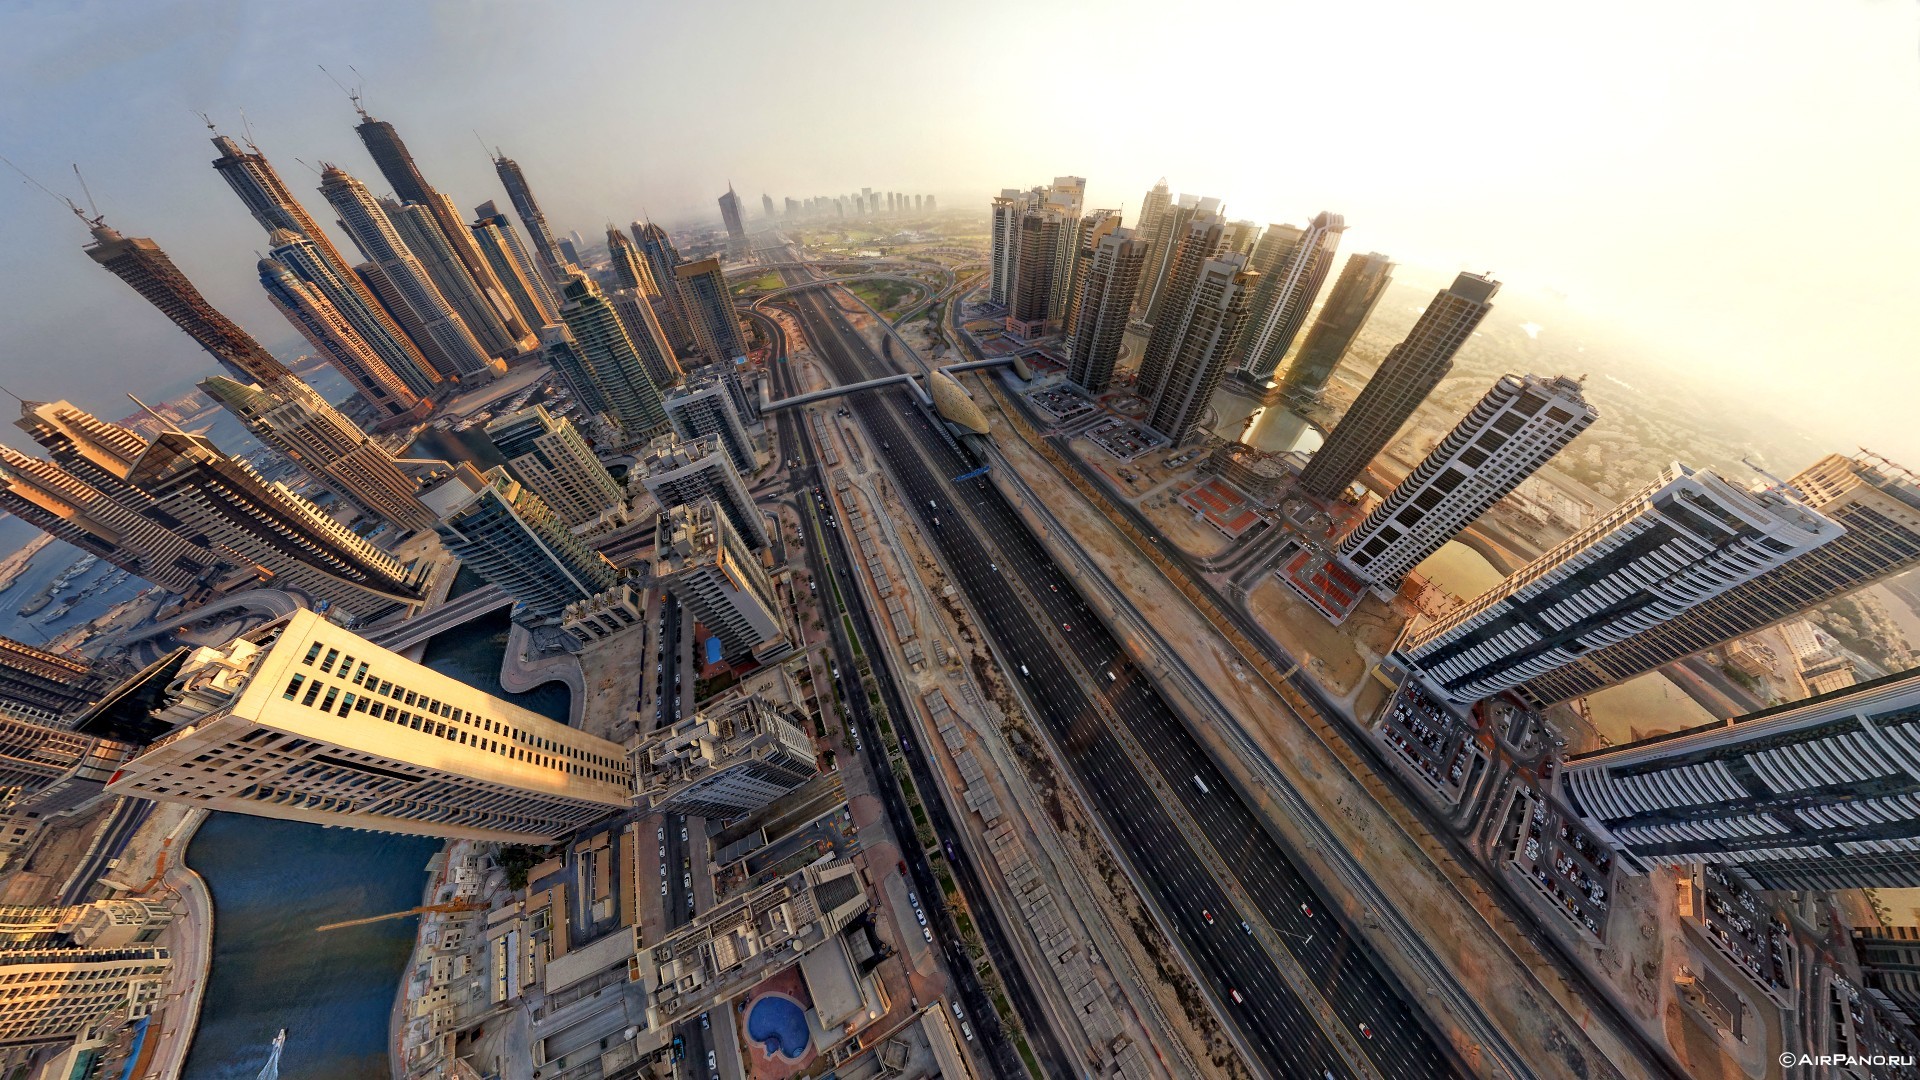 General 1920x1080 cityscape city building aerial view Dubai fisheye lens